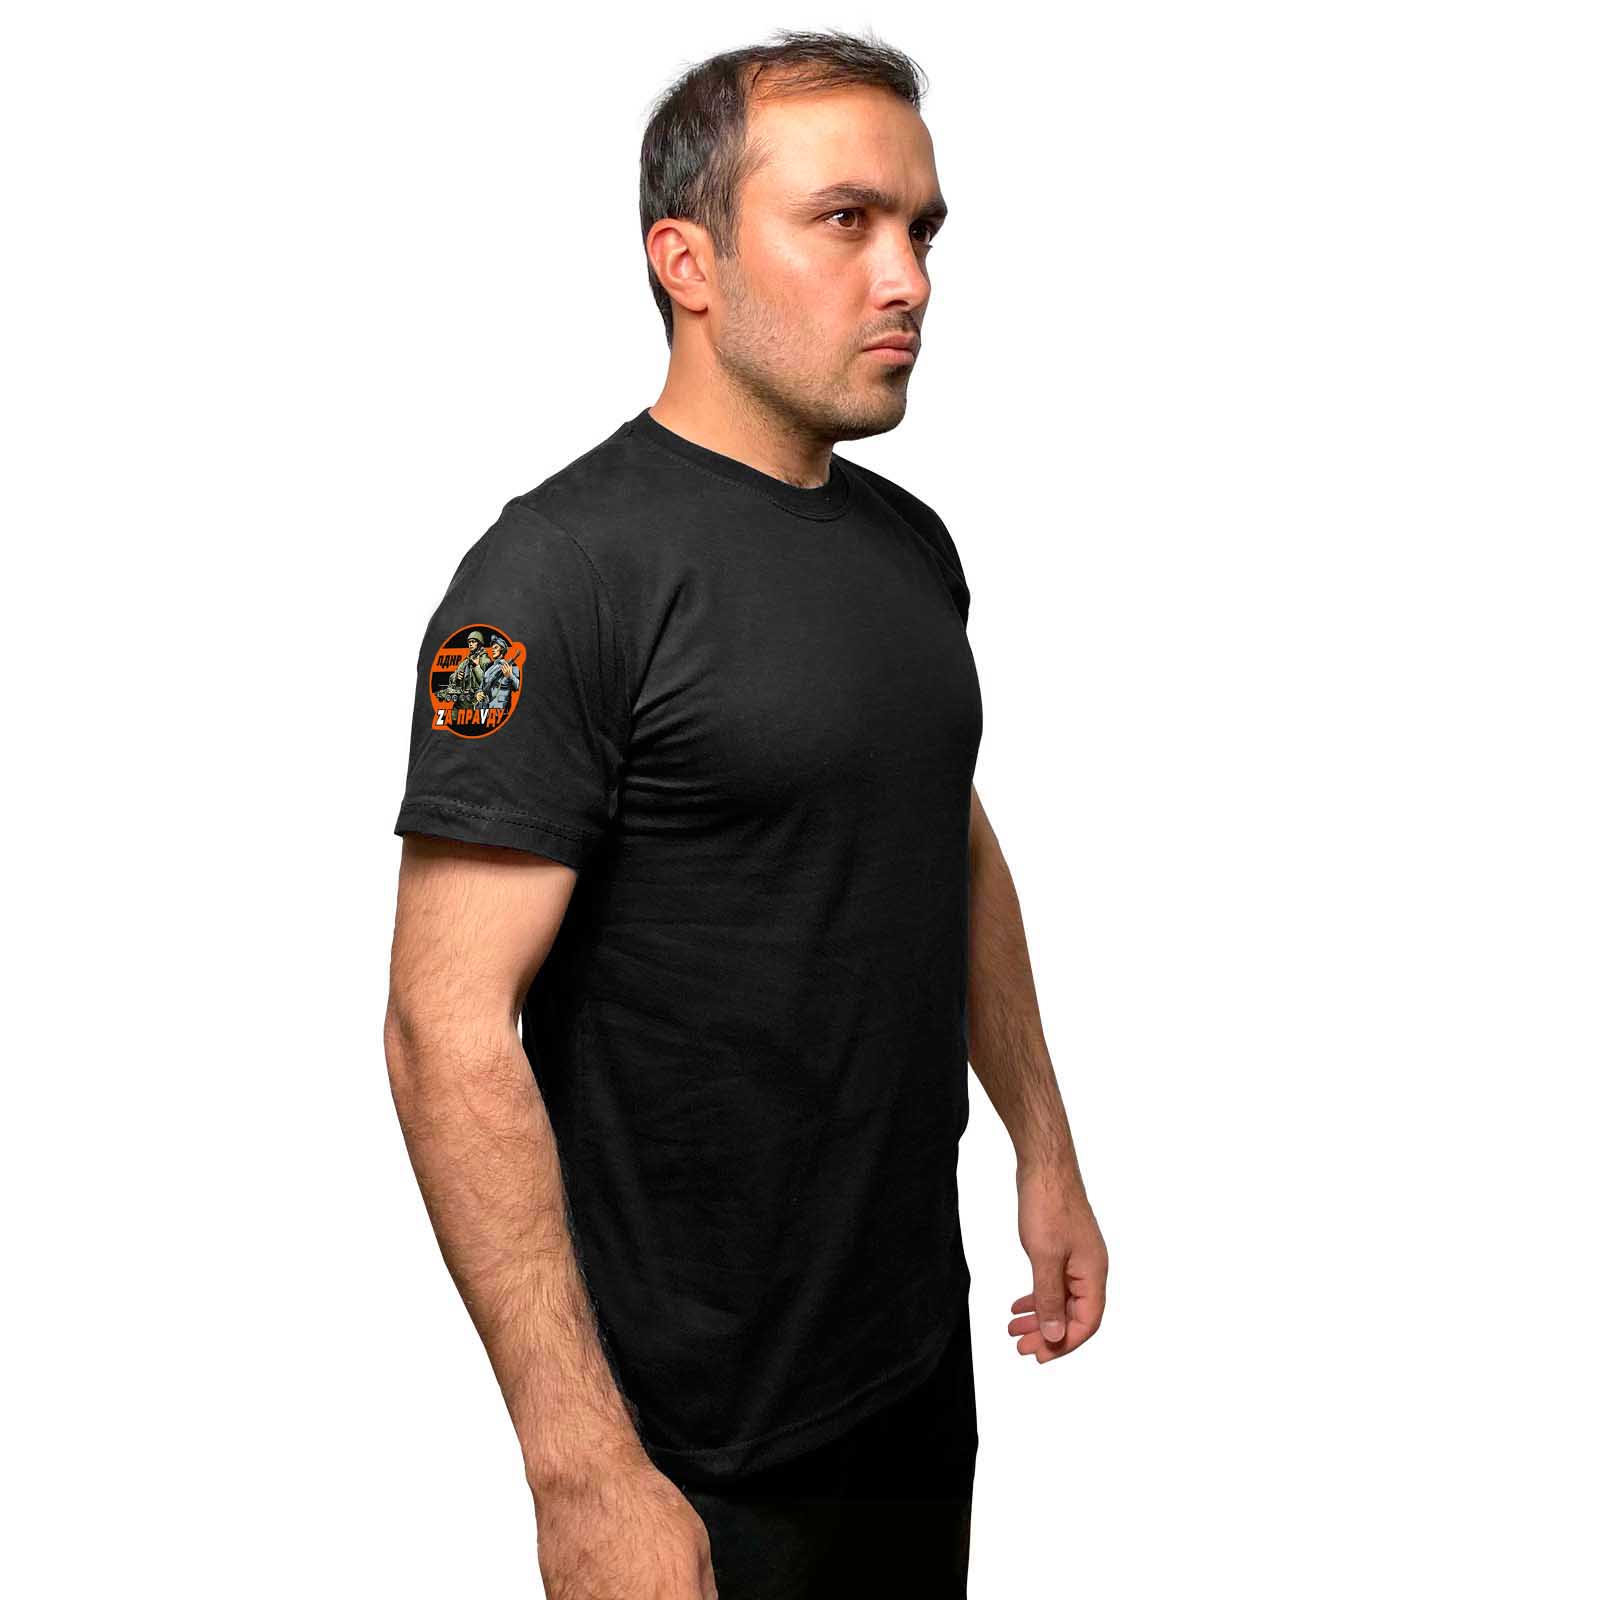 Чёрная футболка с гвардейским термотрансфером ЛДНР "Zа праVду" на рукаве